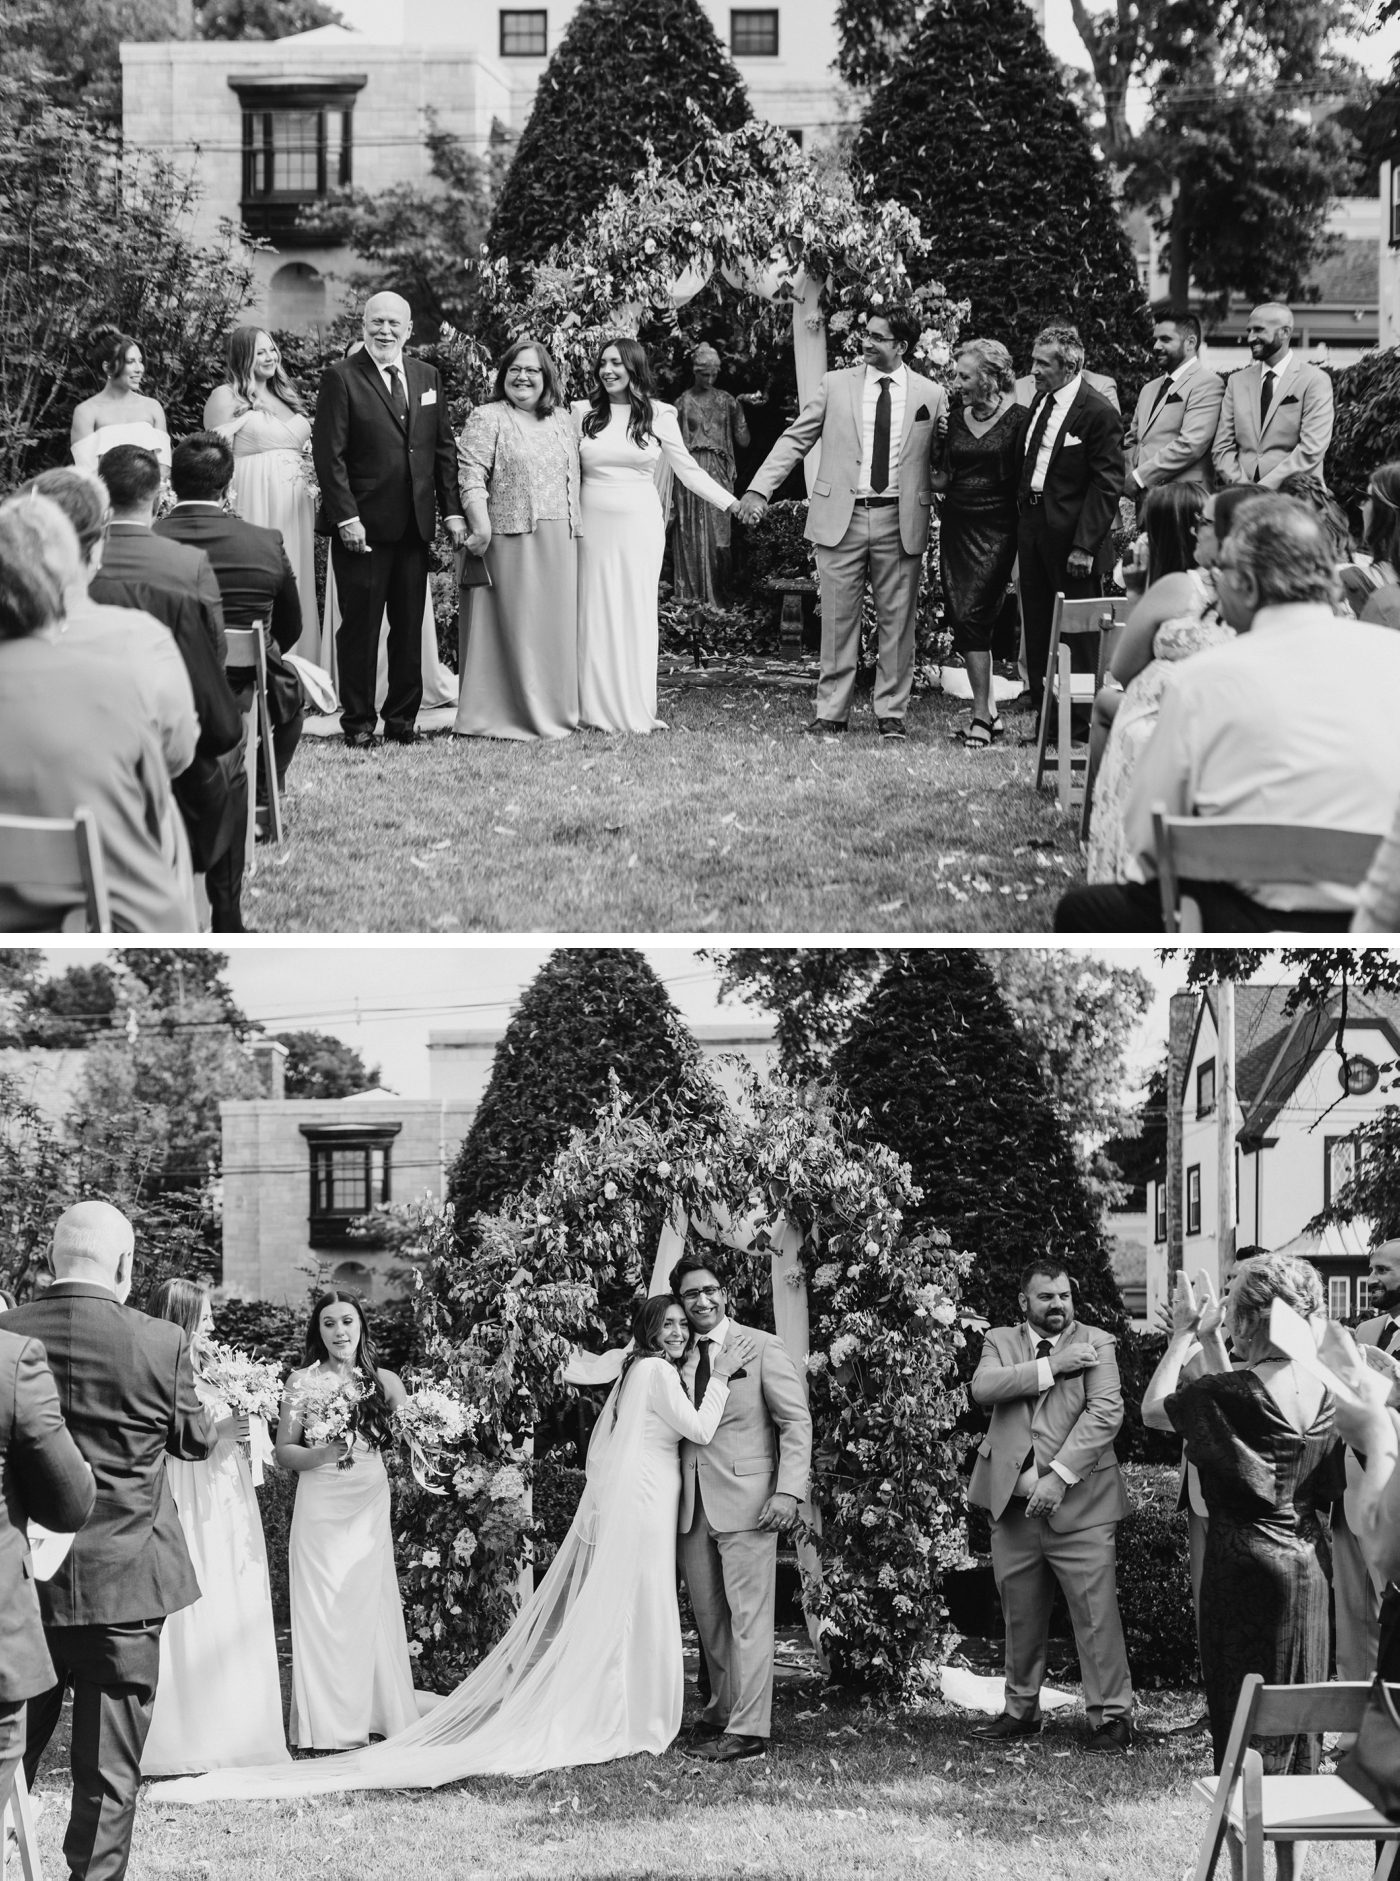 Wedding ceremony at The Garret Club